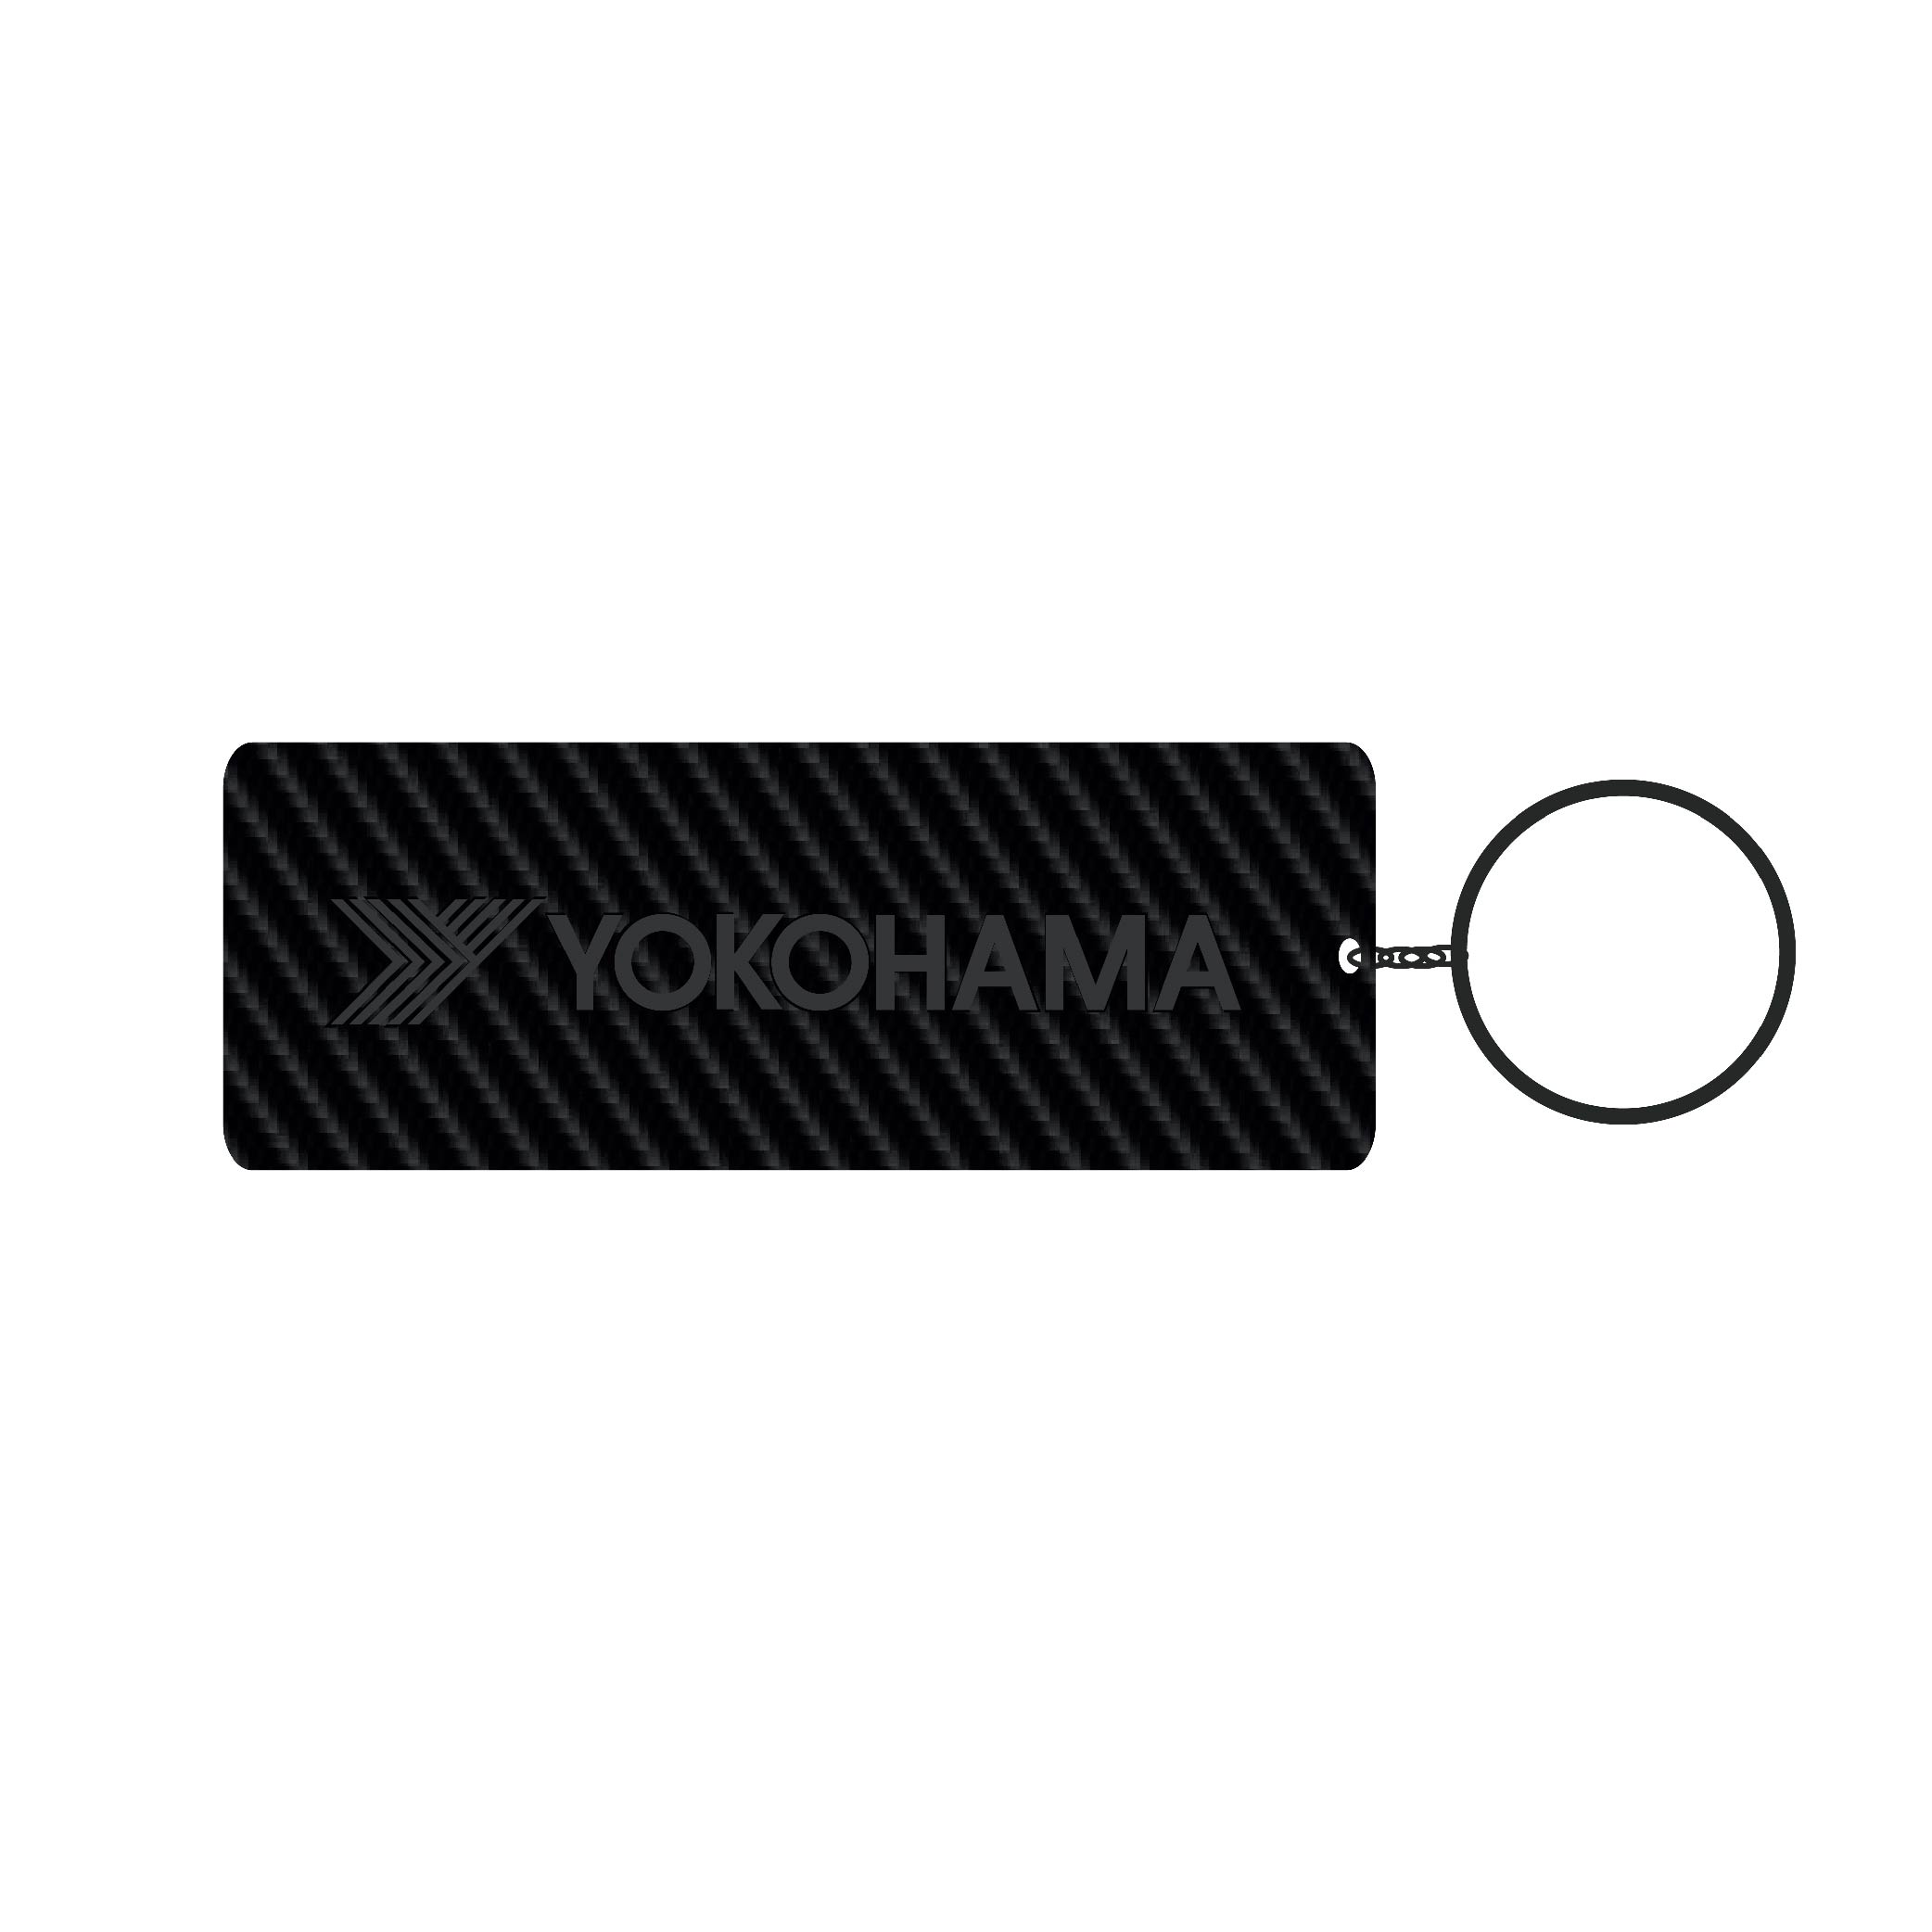 YOKOHAMA Carbon-fibre Keychain